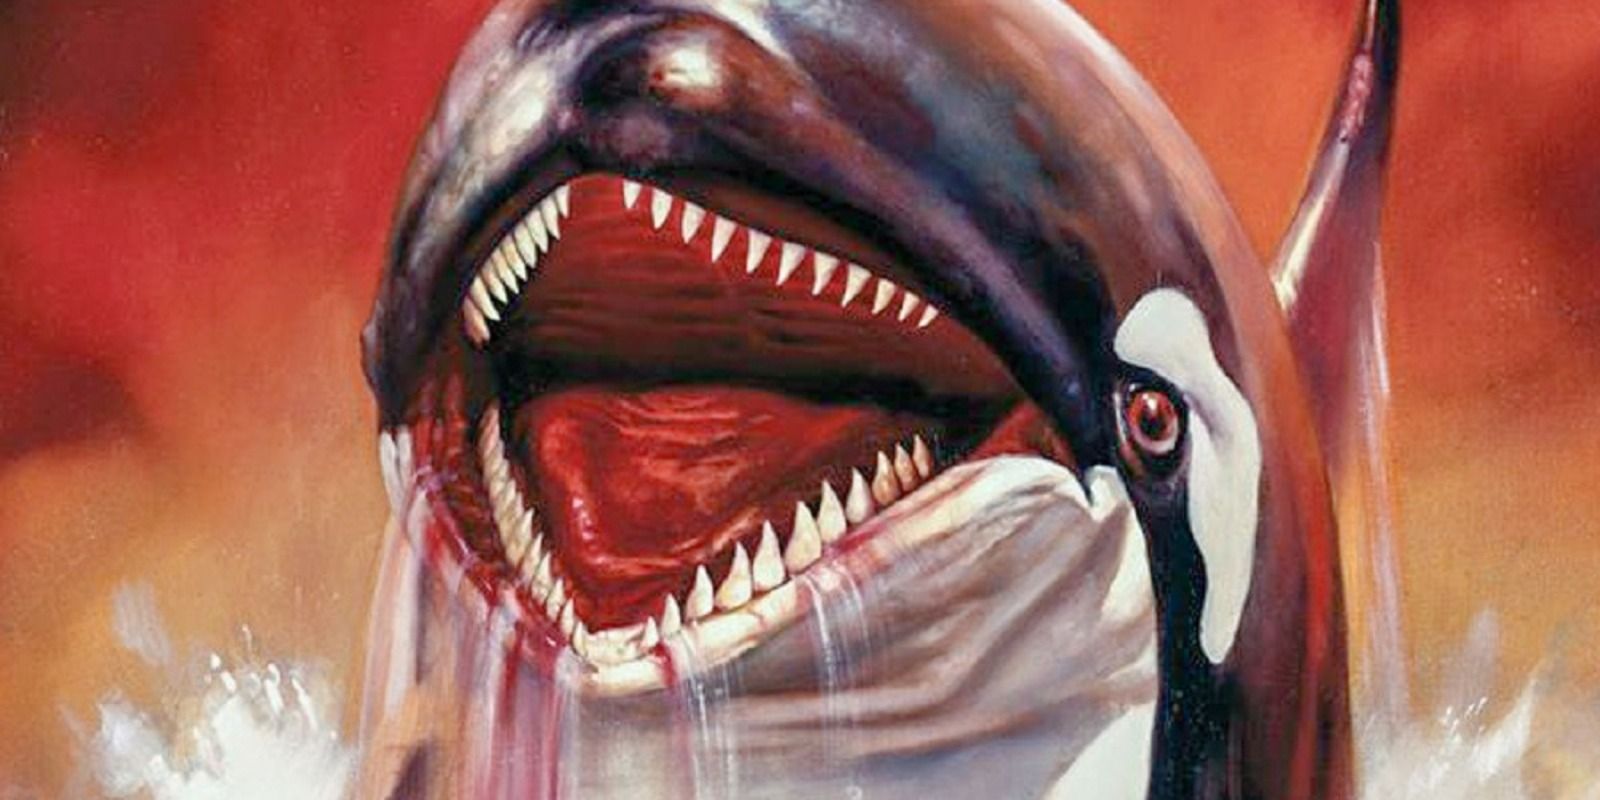 Orca Scream Factory blu ray cover art